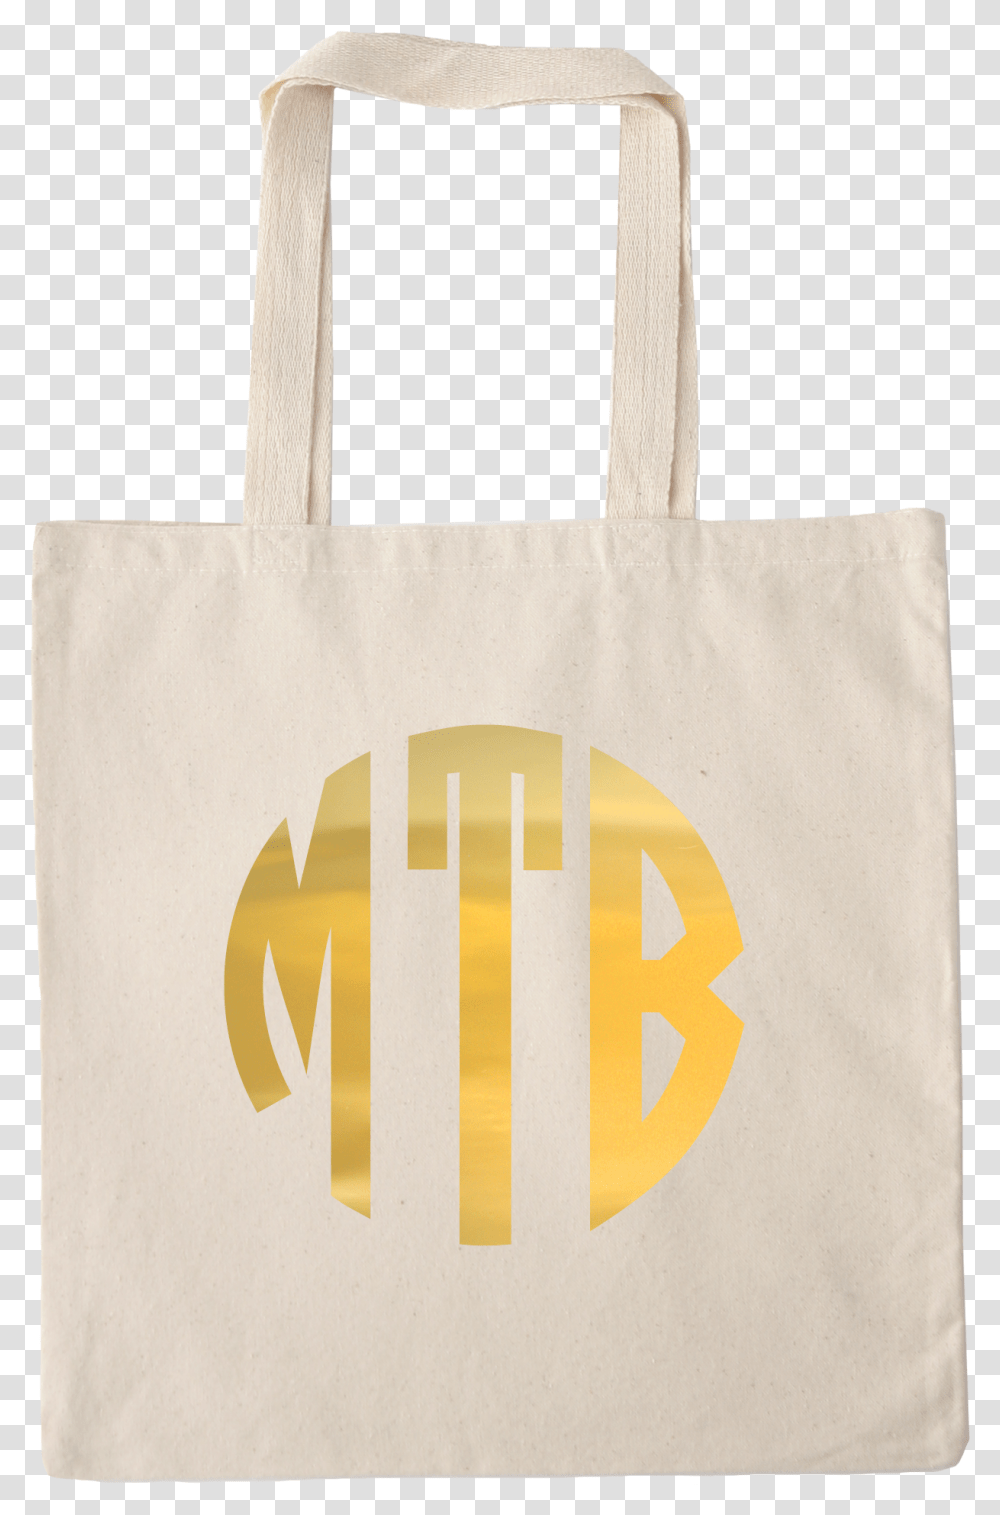 Bavlnen Taka, Tote Bag, Shopping Bag Transparent Png